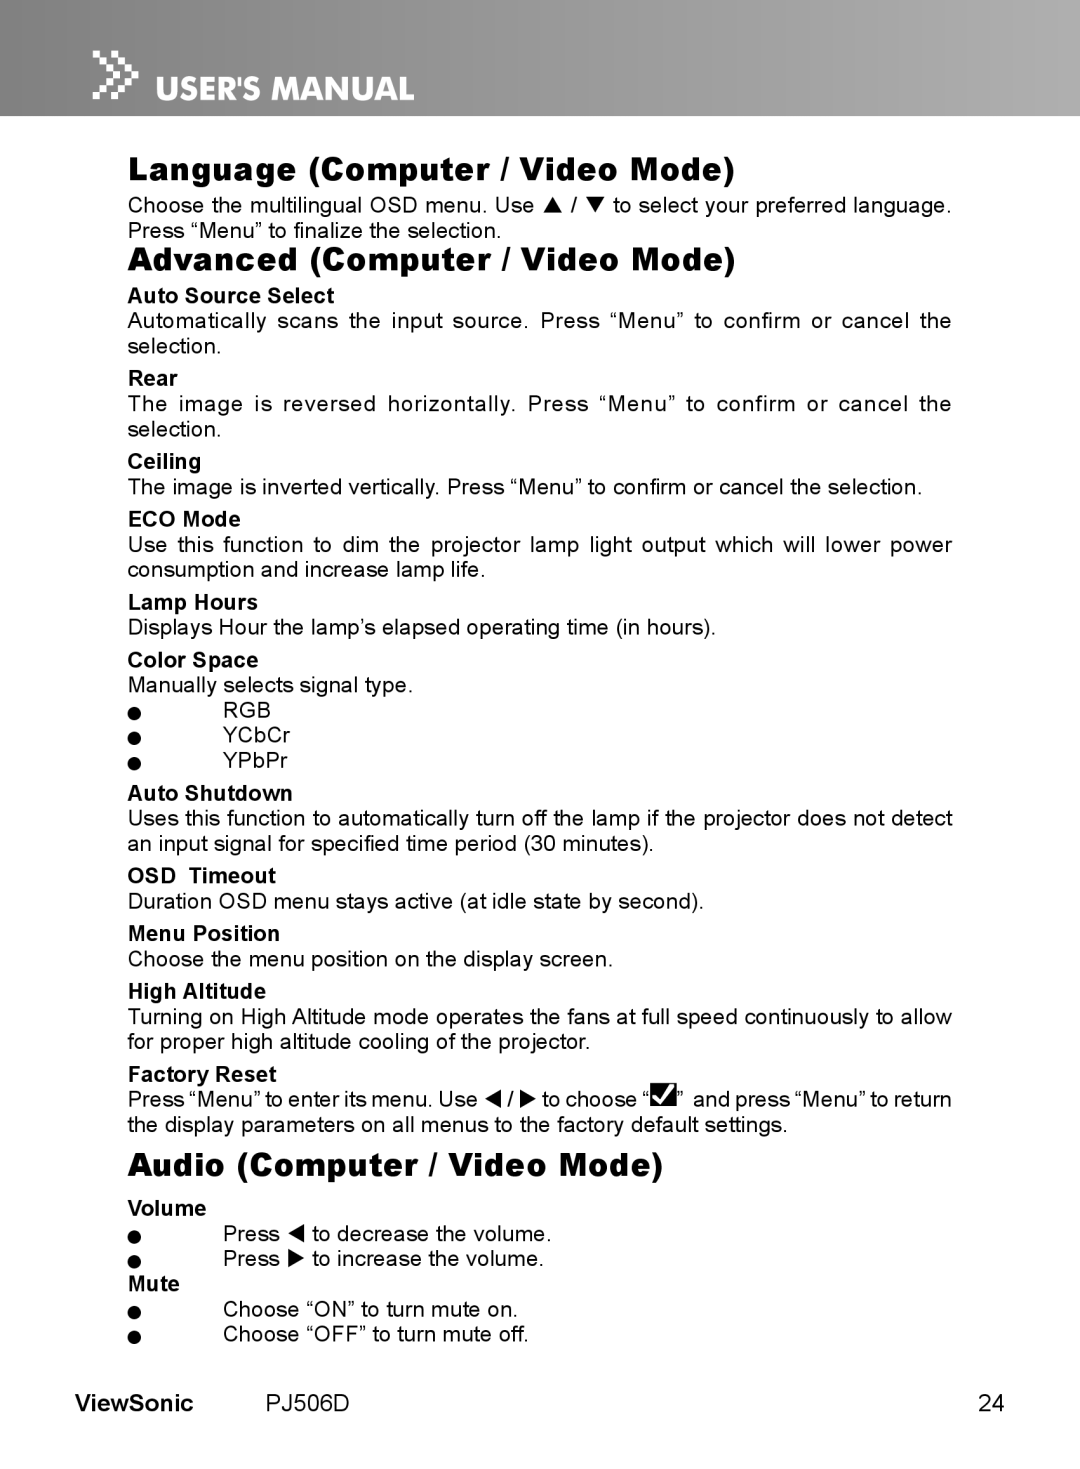 ViewSonic VS11452 Language Computer / Video Mode, Advanced Computer / Video Mode, Audio Computer / Video Mode, ViewSonic 